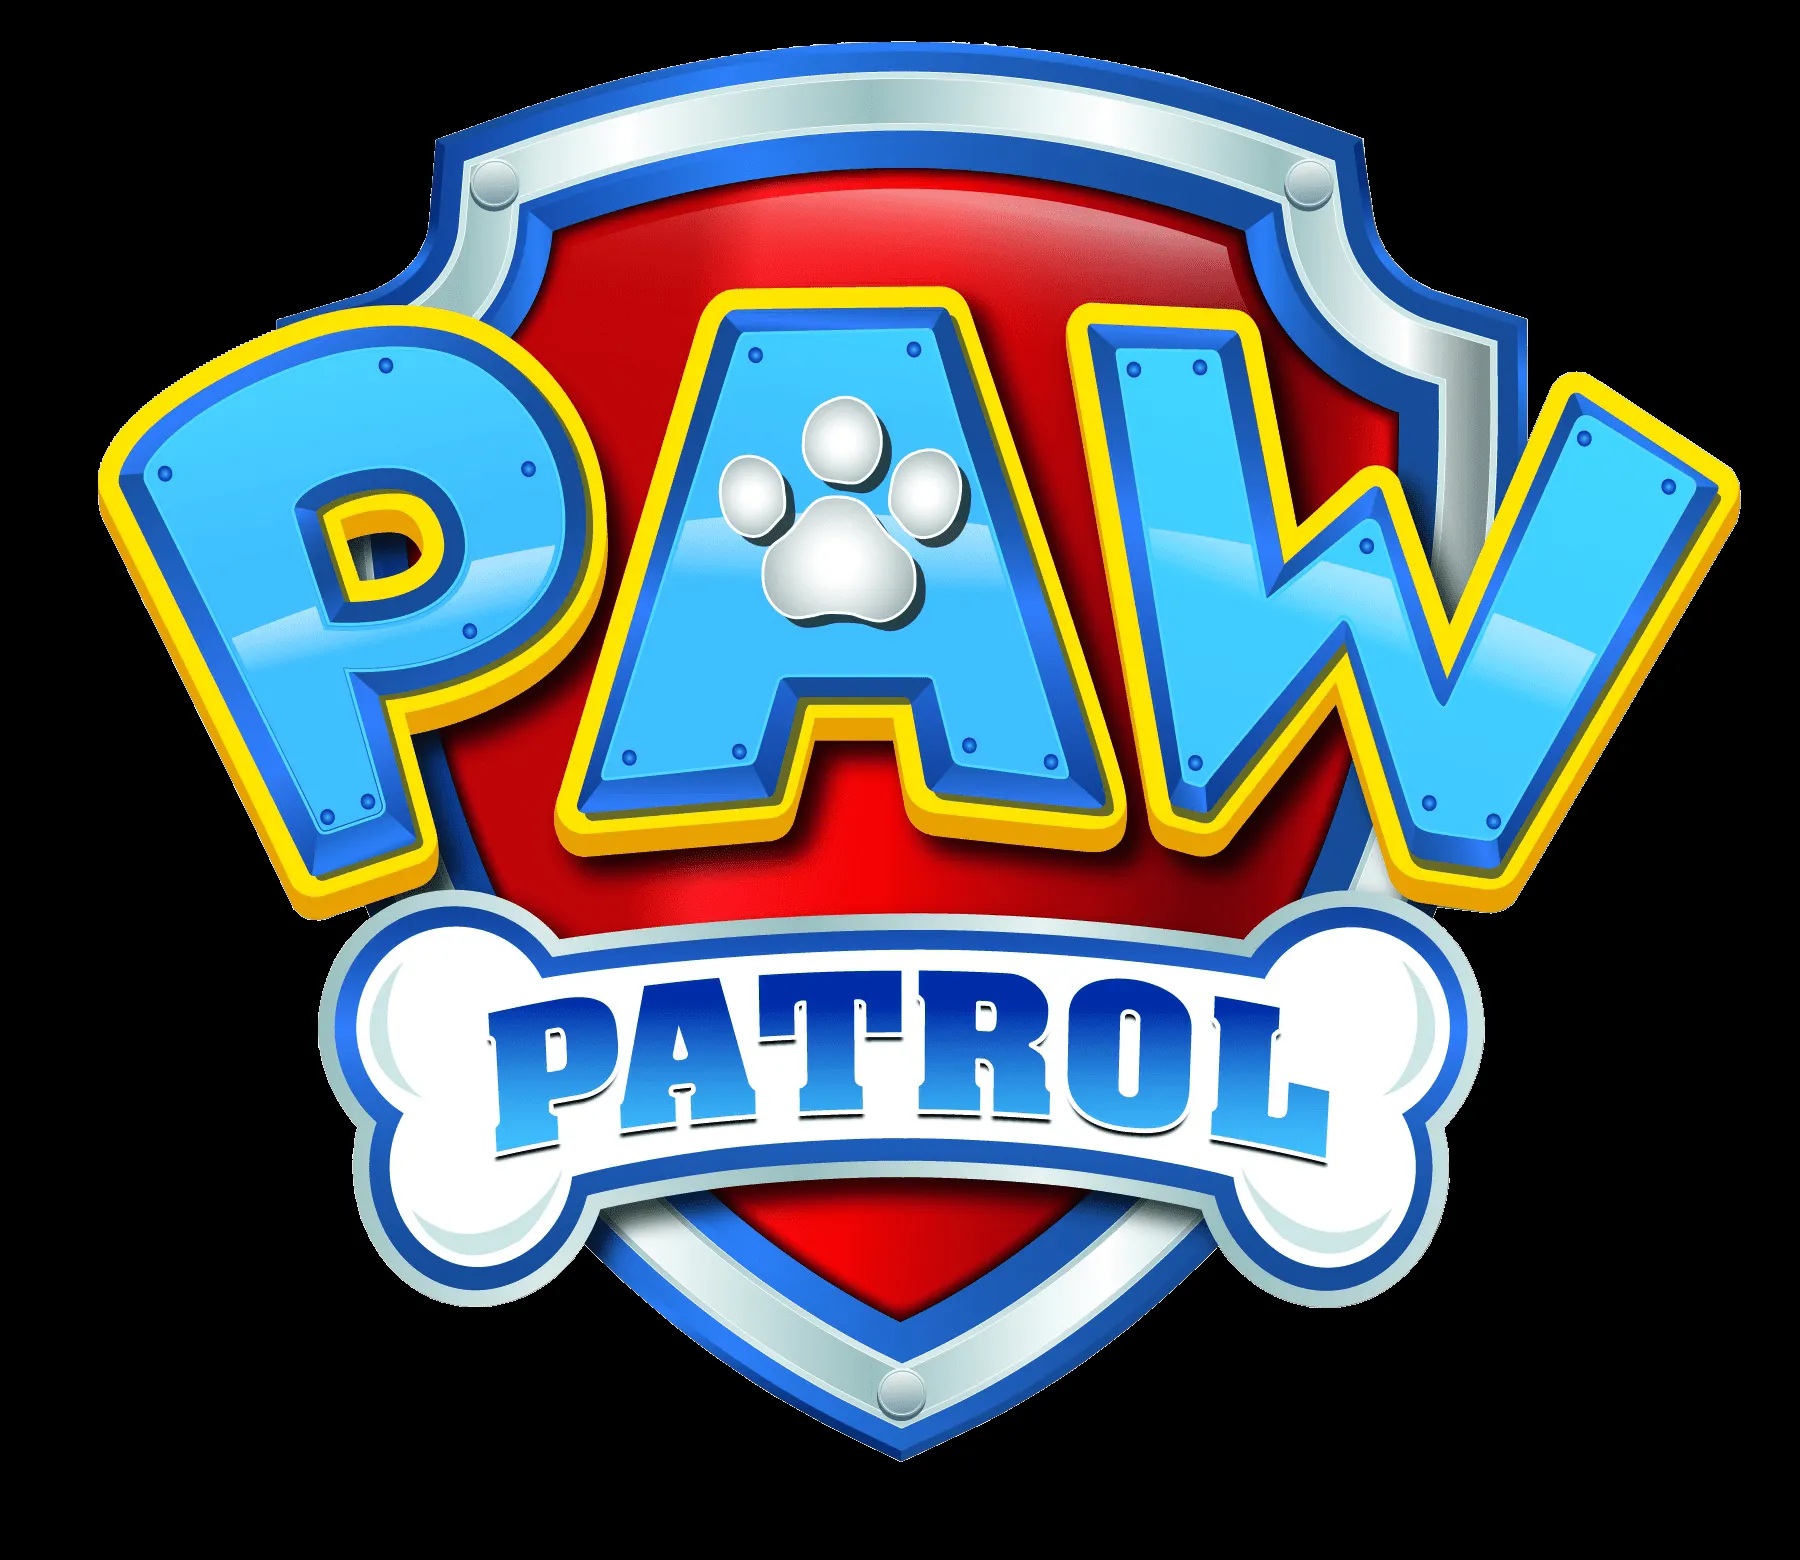 PAW Patrol - Wikipedia, la enciclopedia libre